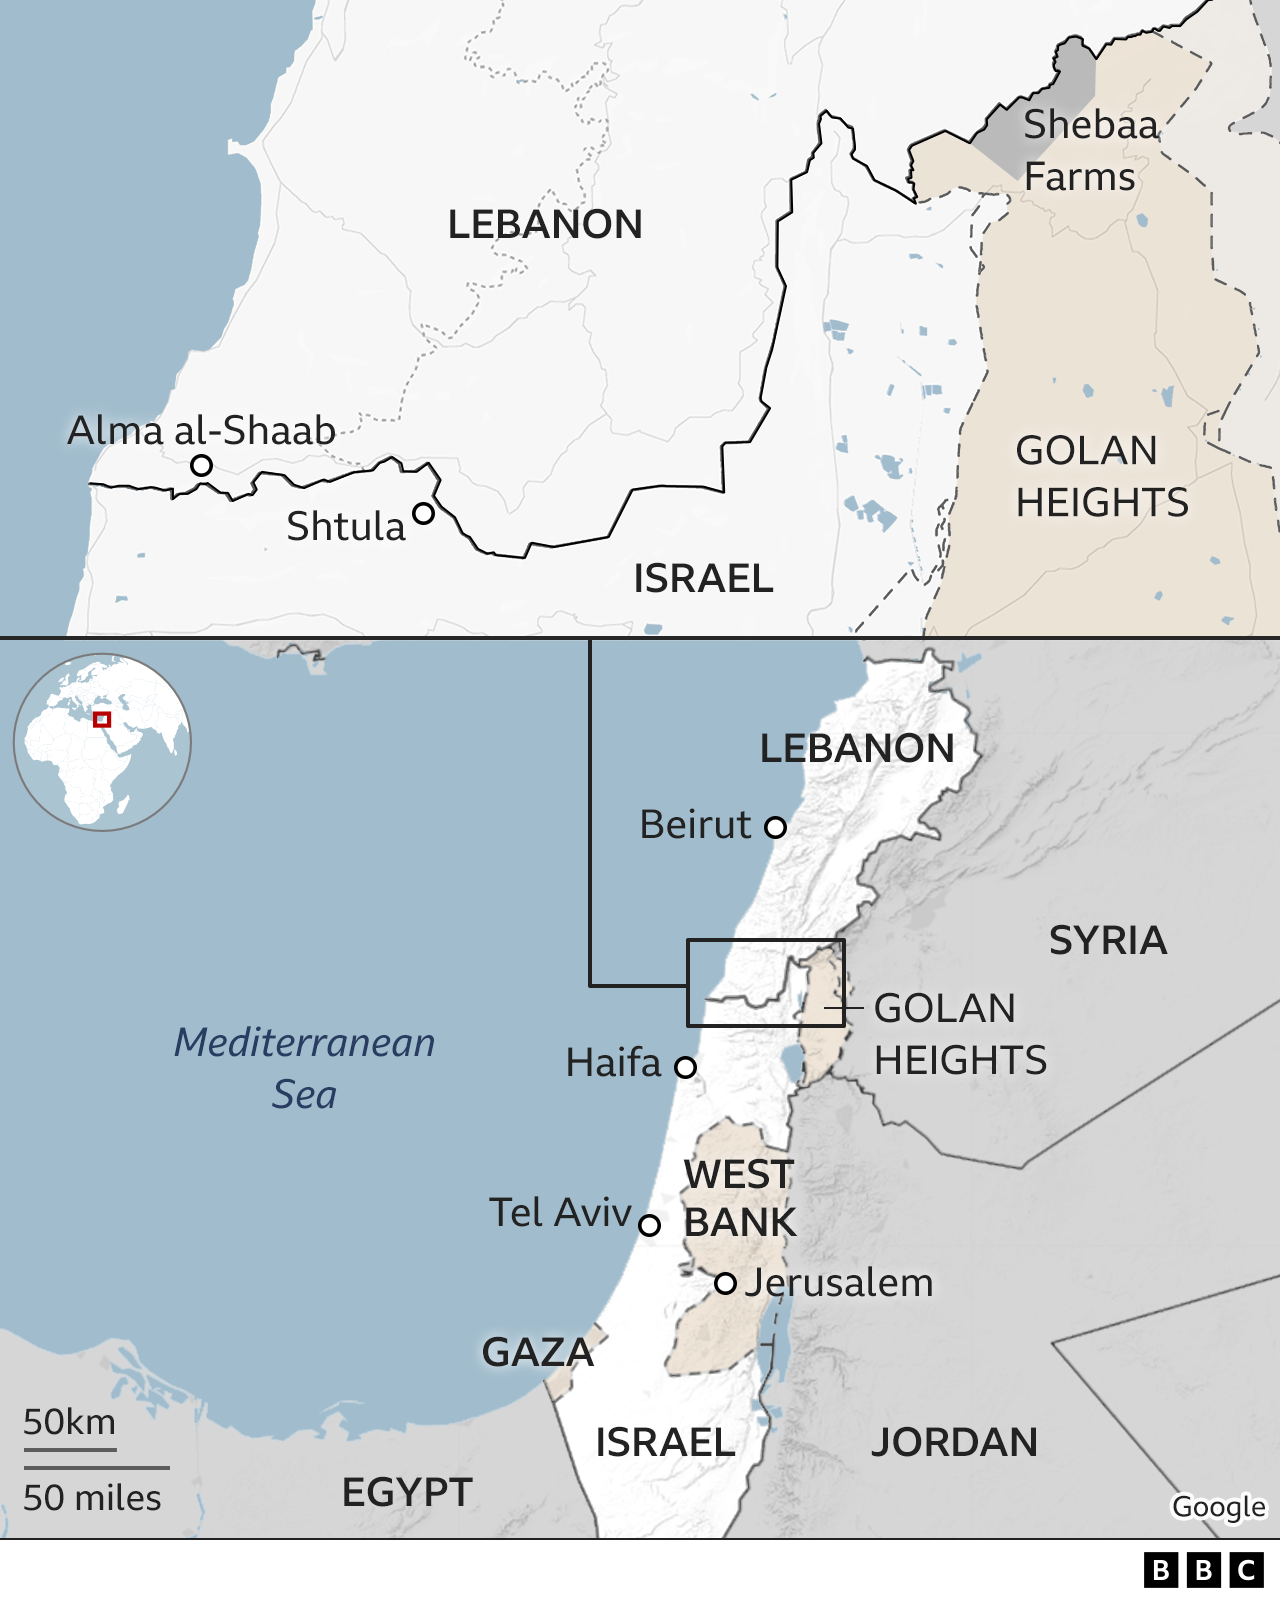 Israel evacuates communities near Lebanon border amid fears of